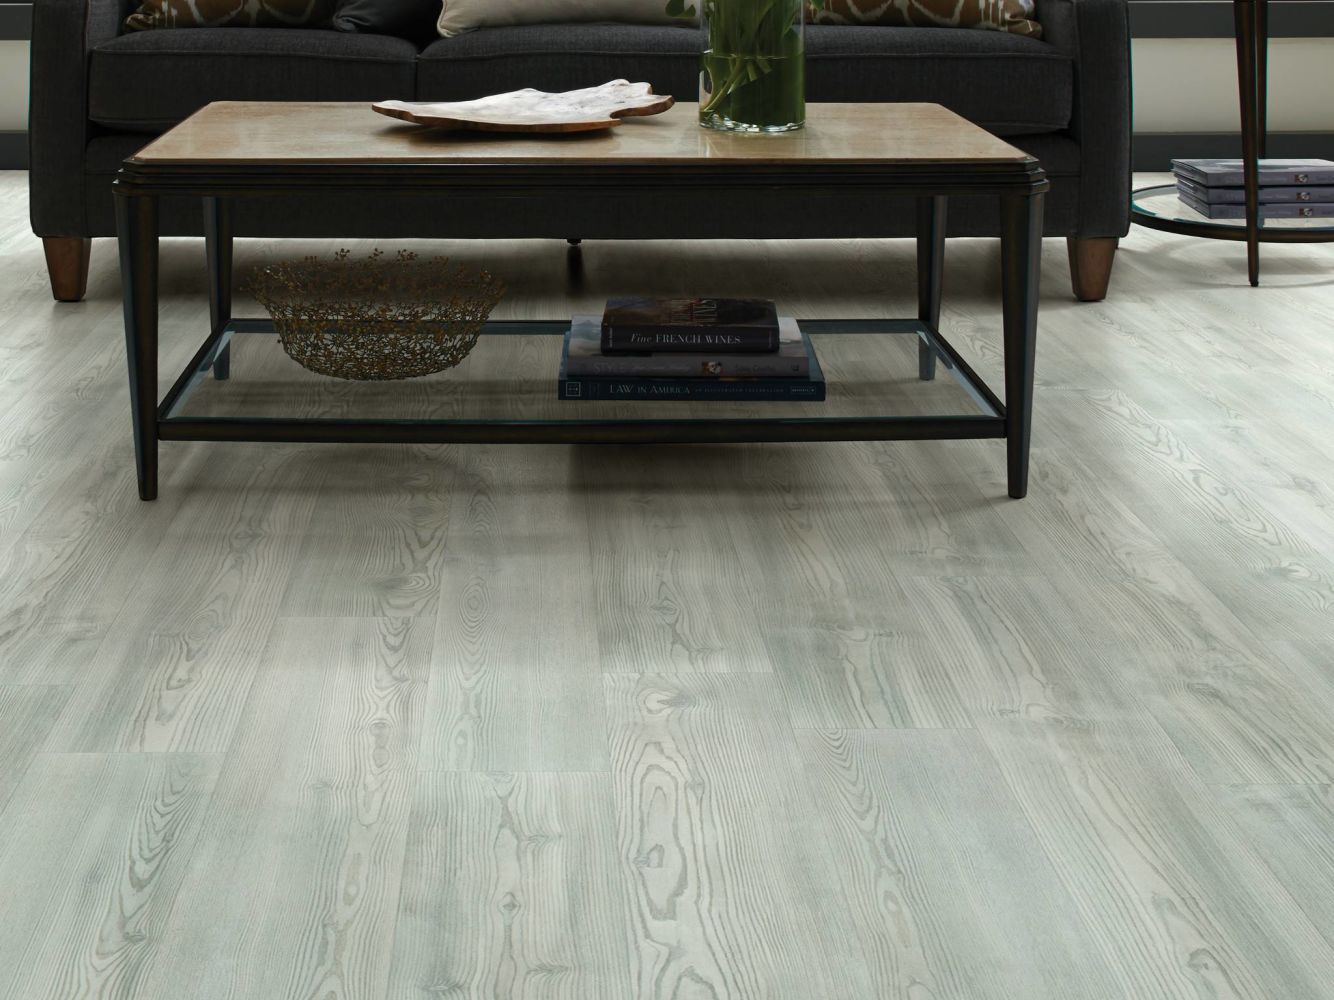 Shaw Floors Colortile Spc Cl Ironside Clean Pine 05077_CV199